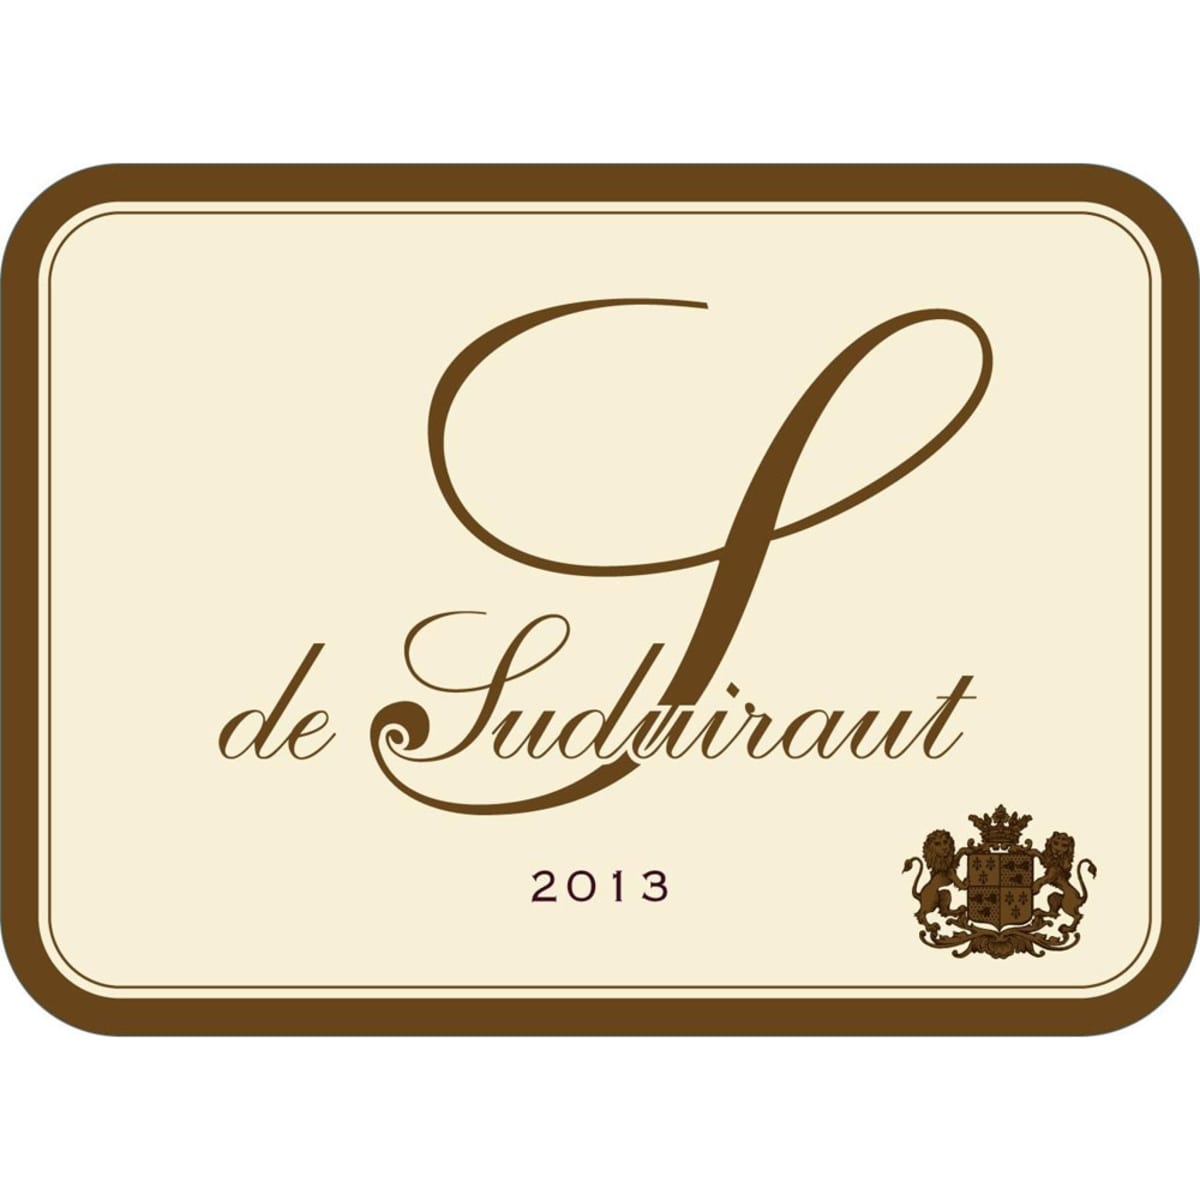 Chateau Suduiraut S de Suduiraut 2013 Front Label